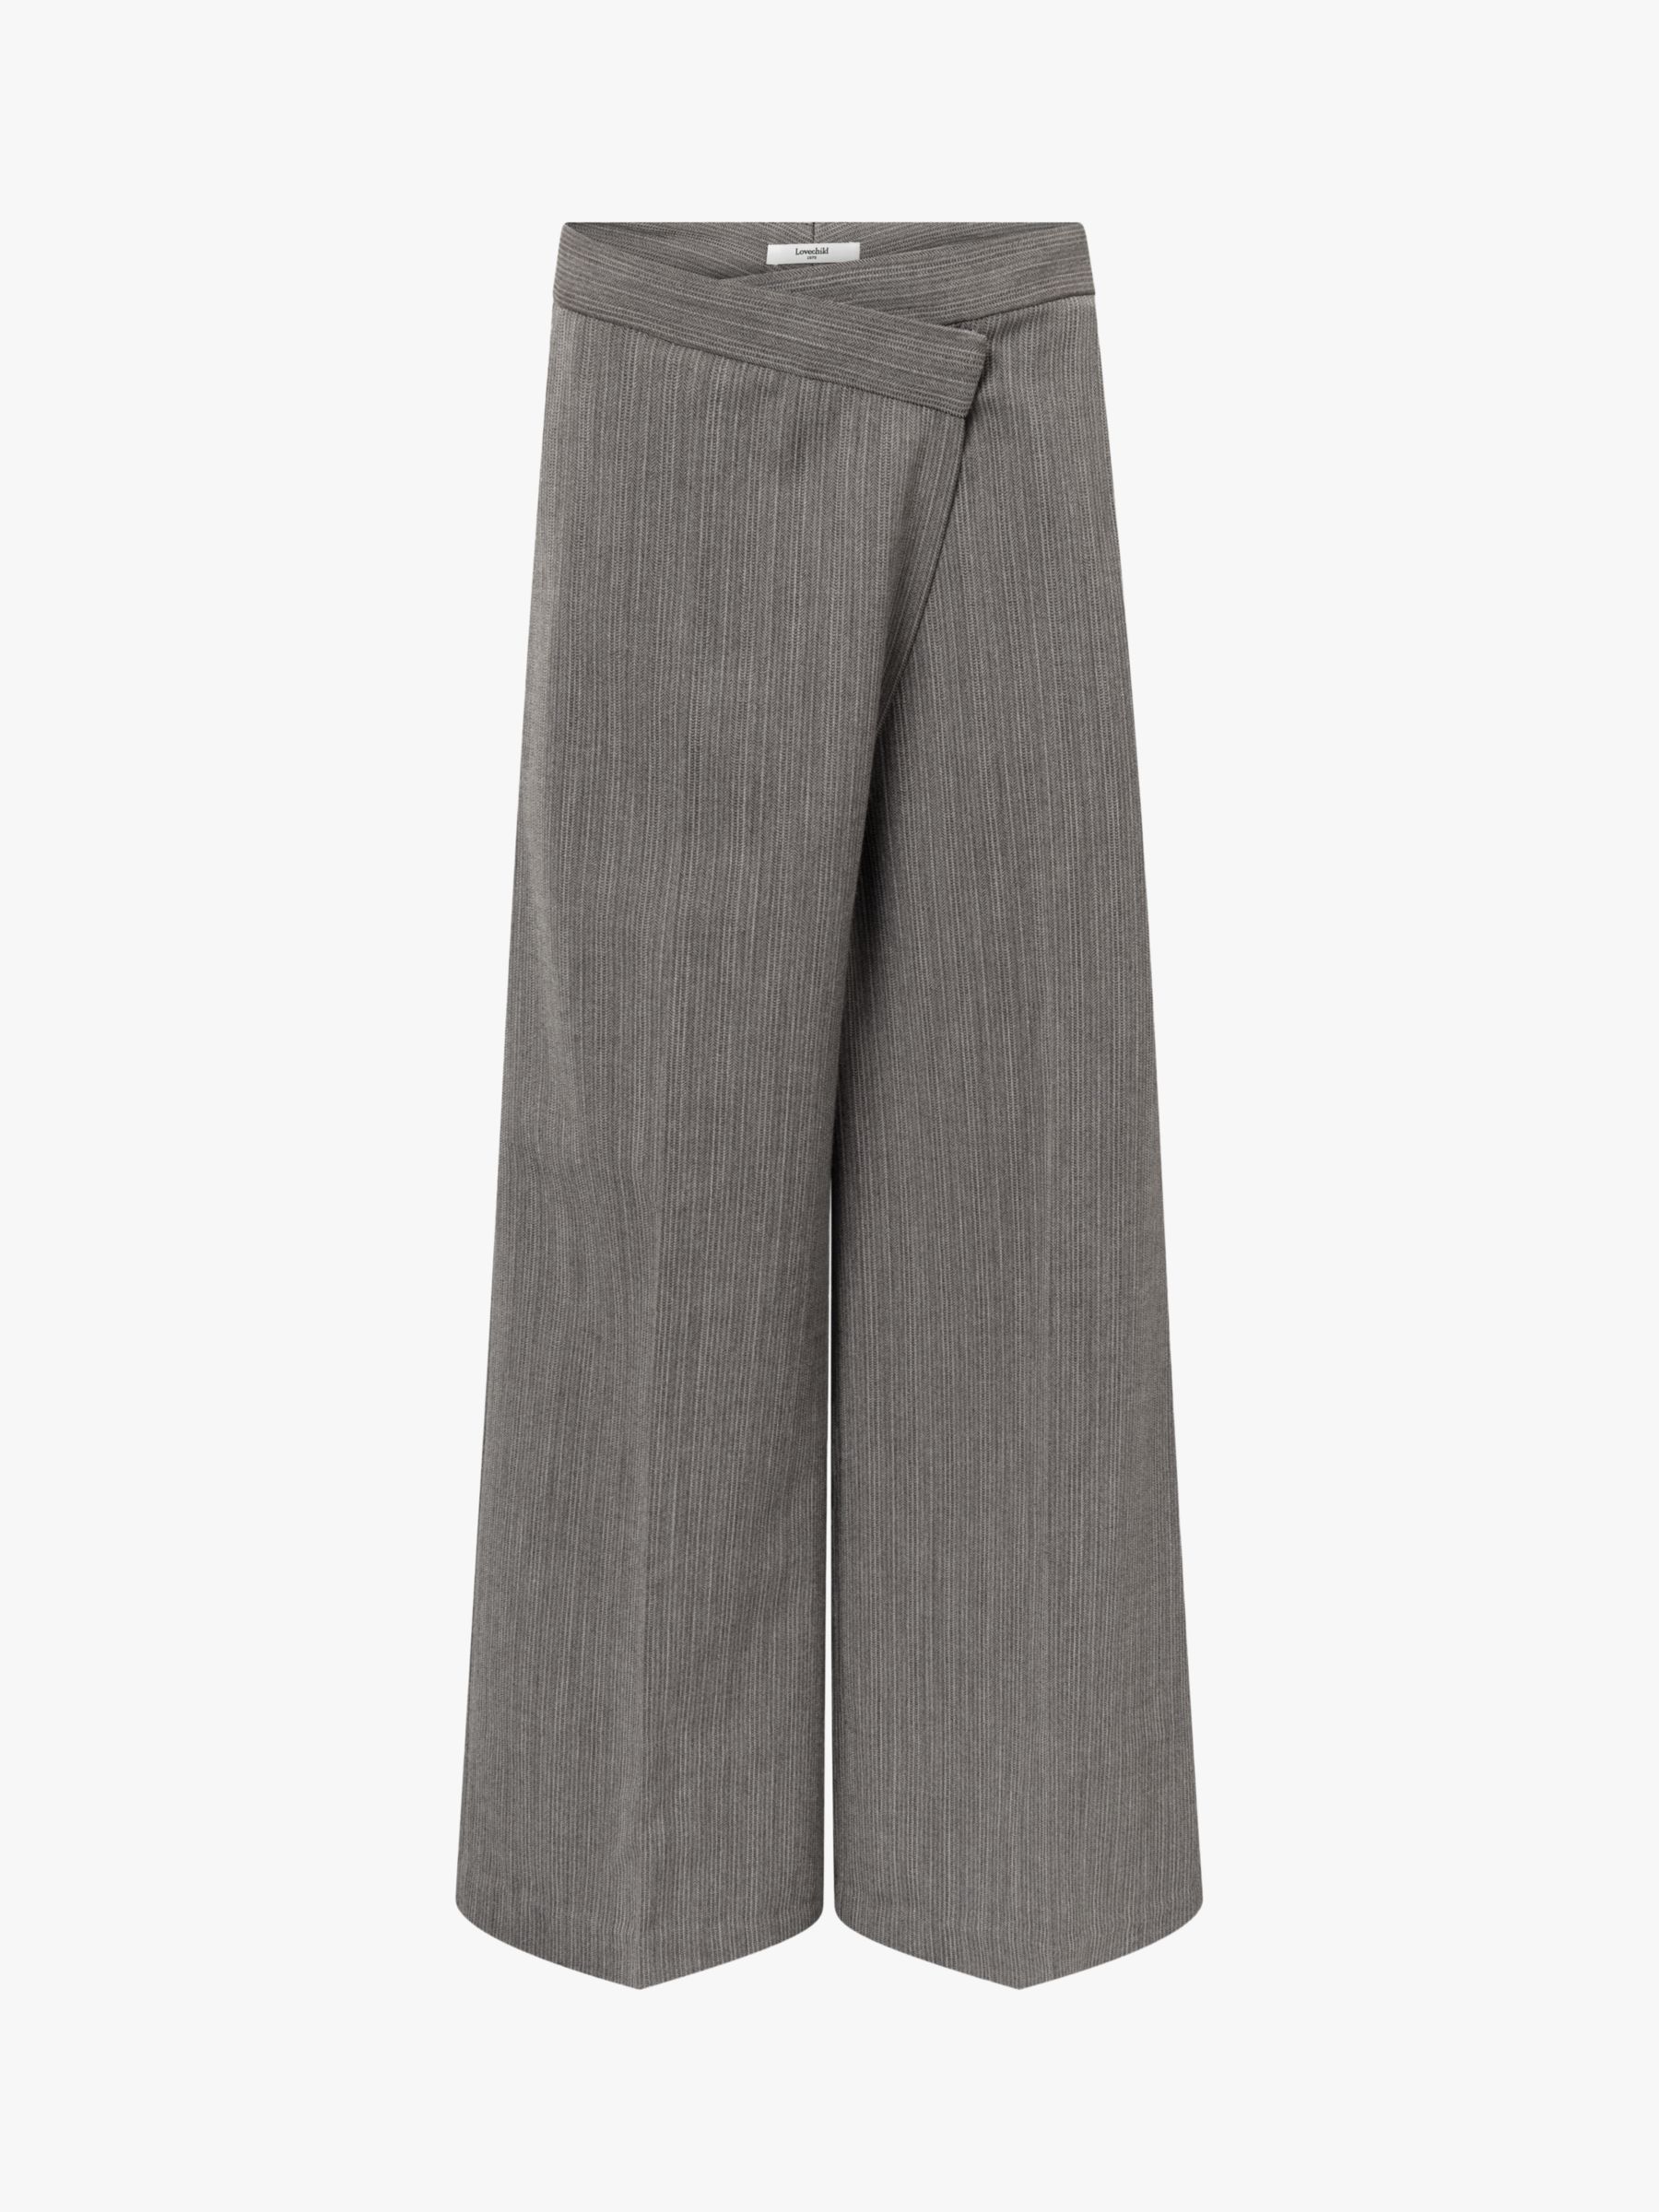 Lovechild 1979 Tabitha Wrap Waist Tailored Trousers, Grey Melange, 8